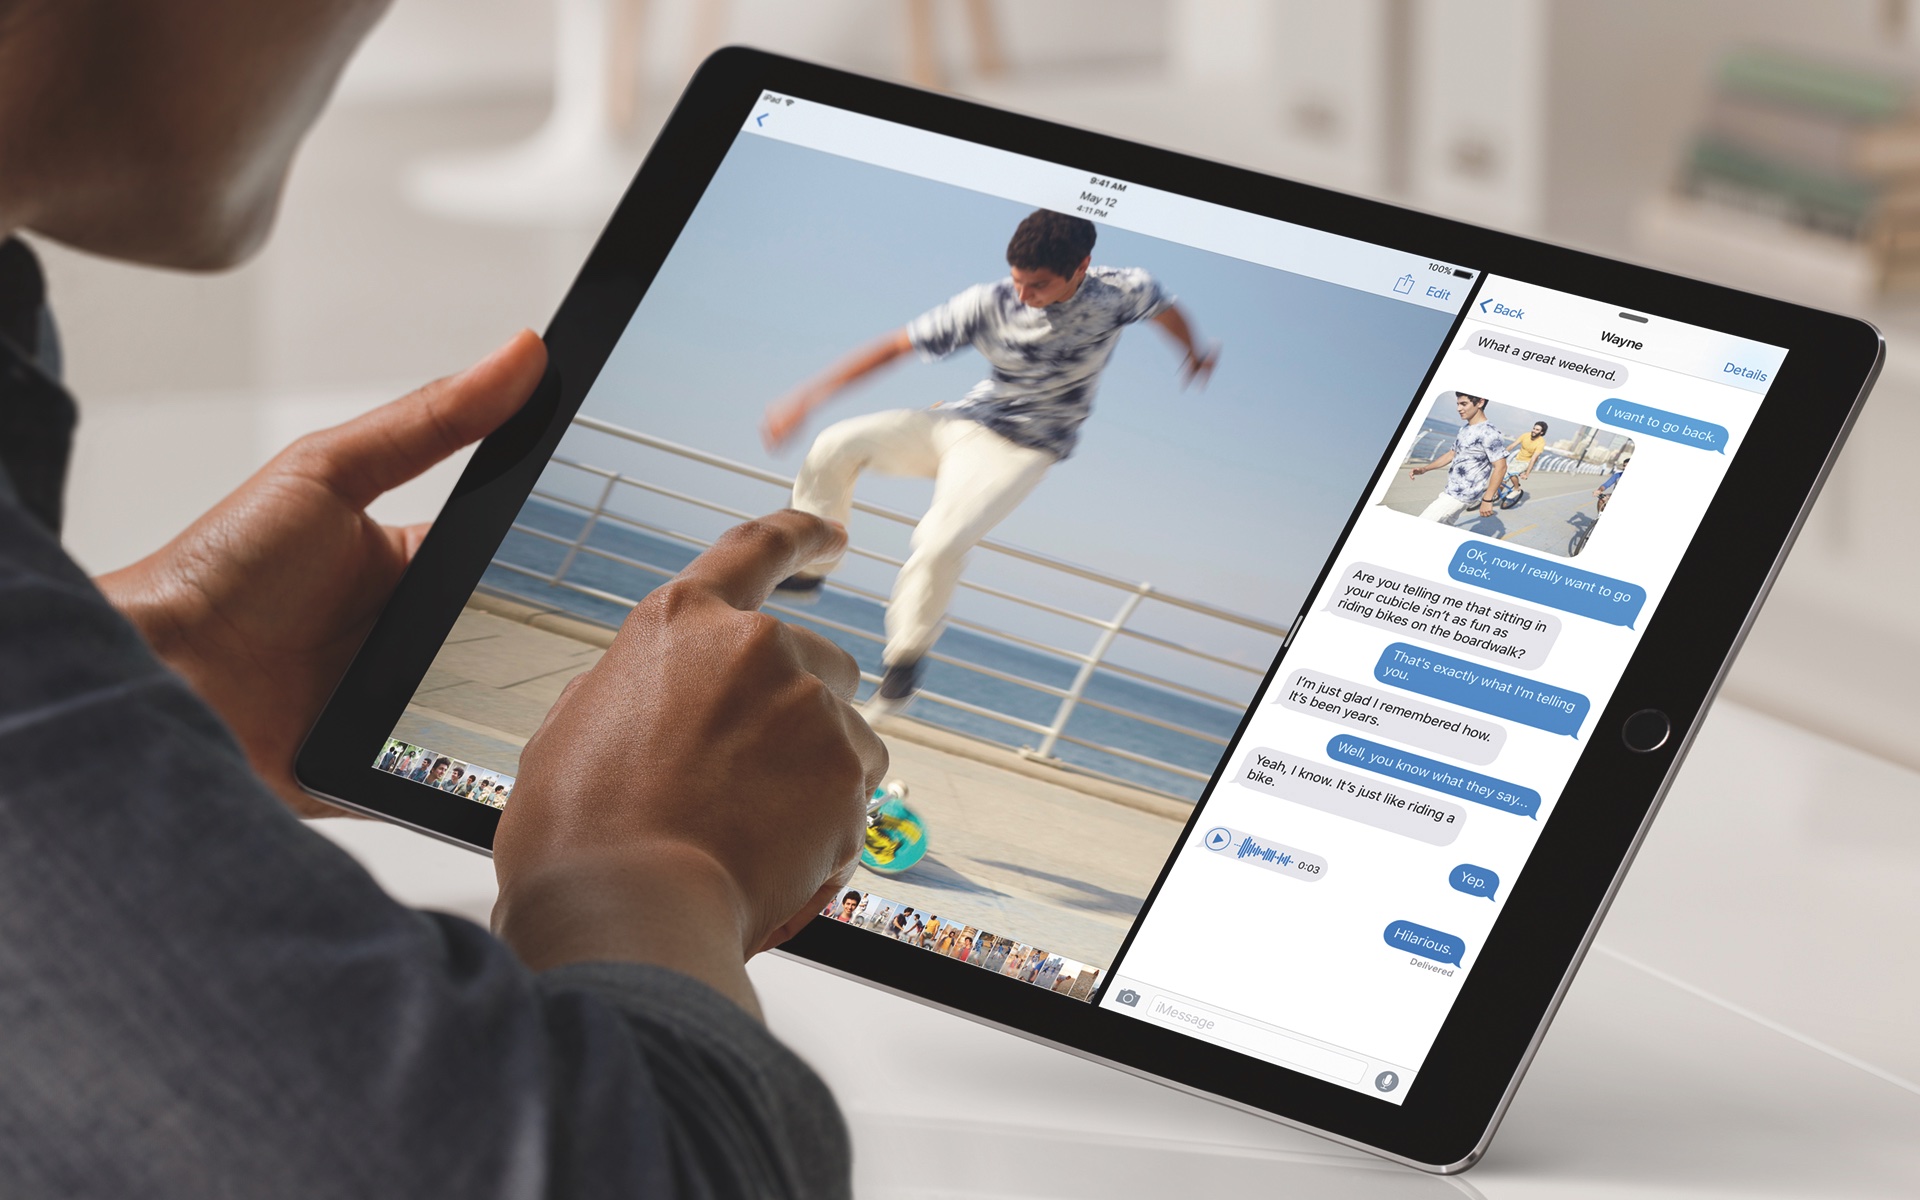 iPad Pro split screen multitasking lifestyle 002